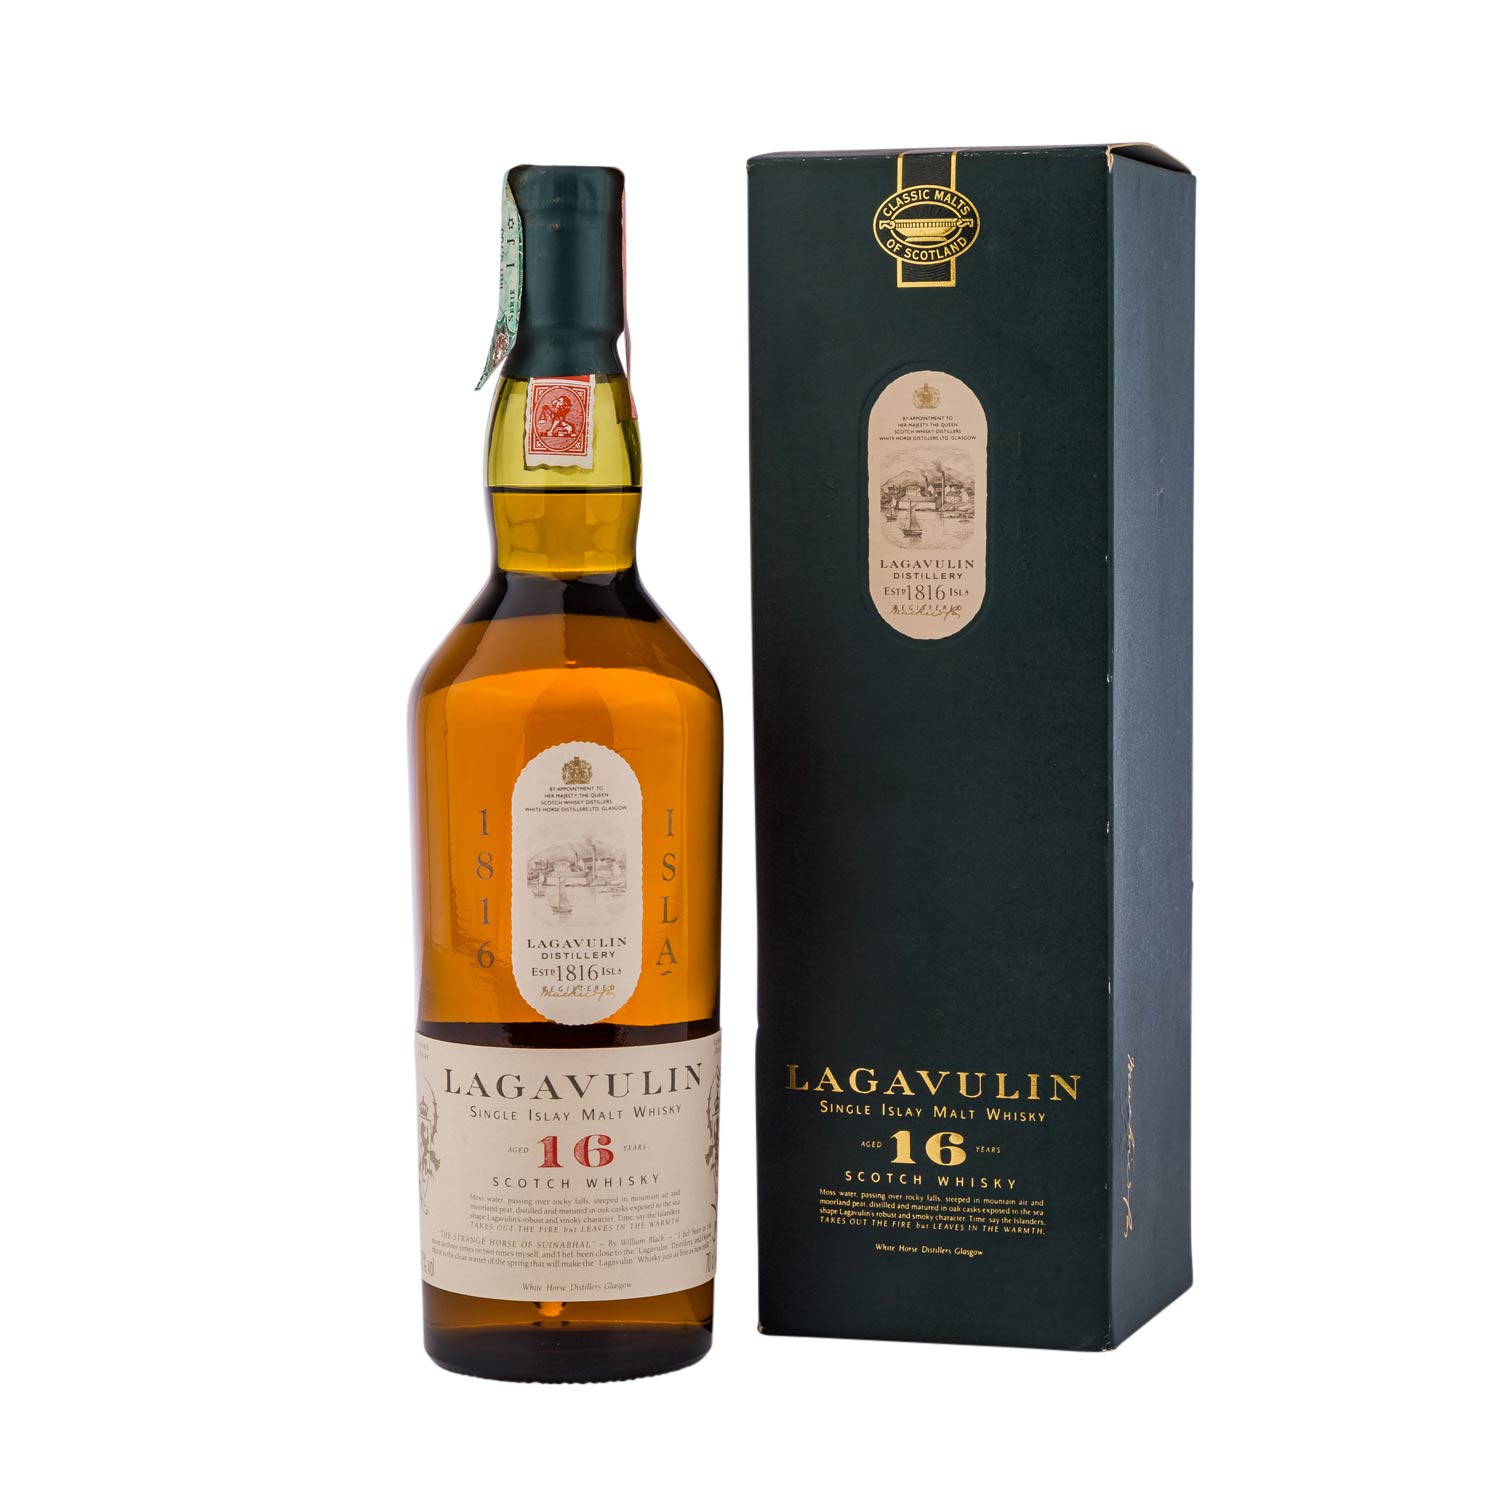 LAGAVULIN 16 years Single Malt Scotch Whisky,Region: Islay, White Horse Distillery, Teil der - Image 2 of 3